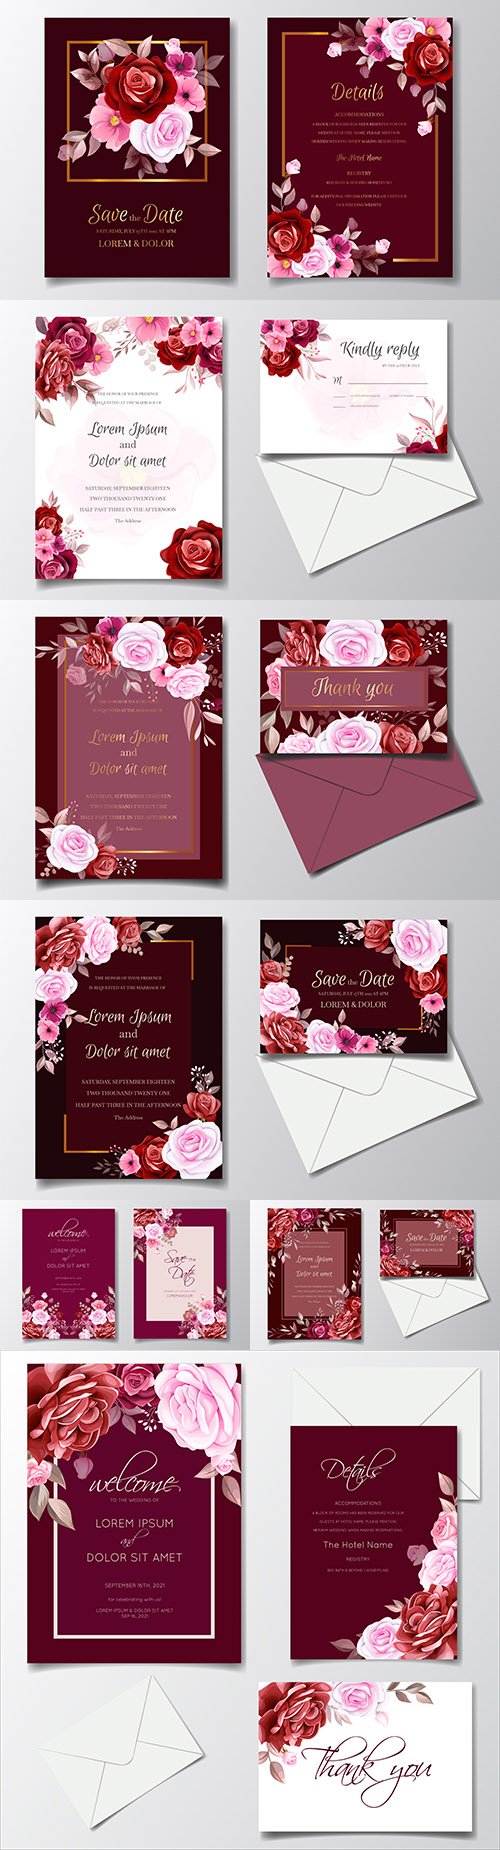 Romantic wedding invitation template with flowers